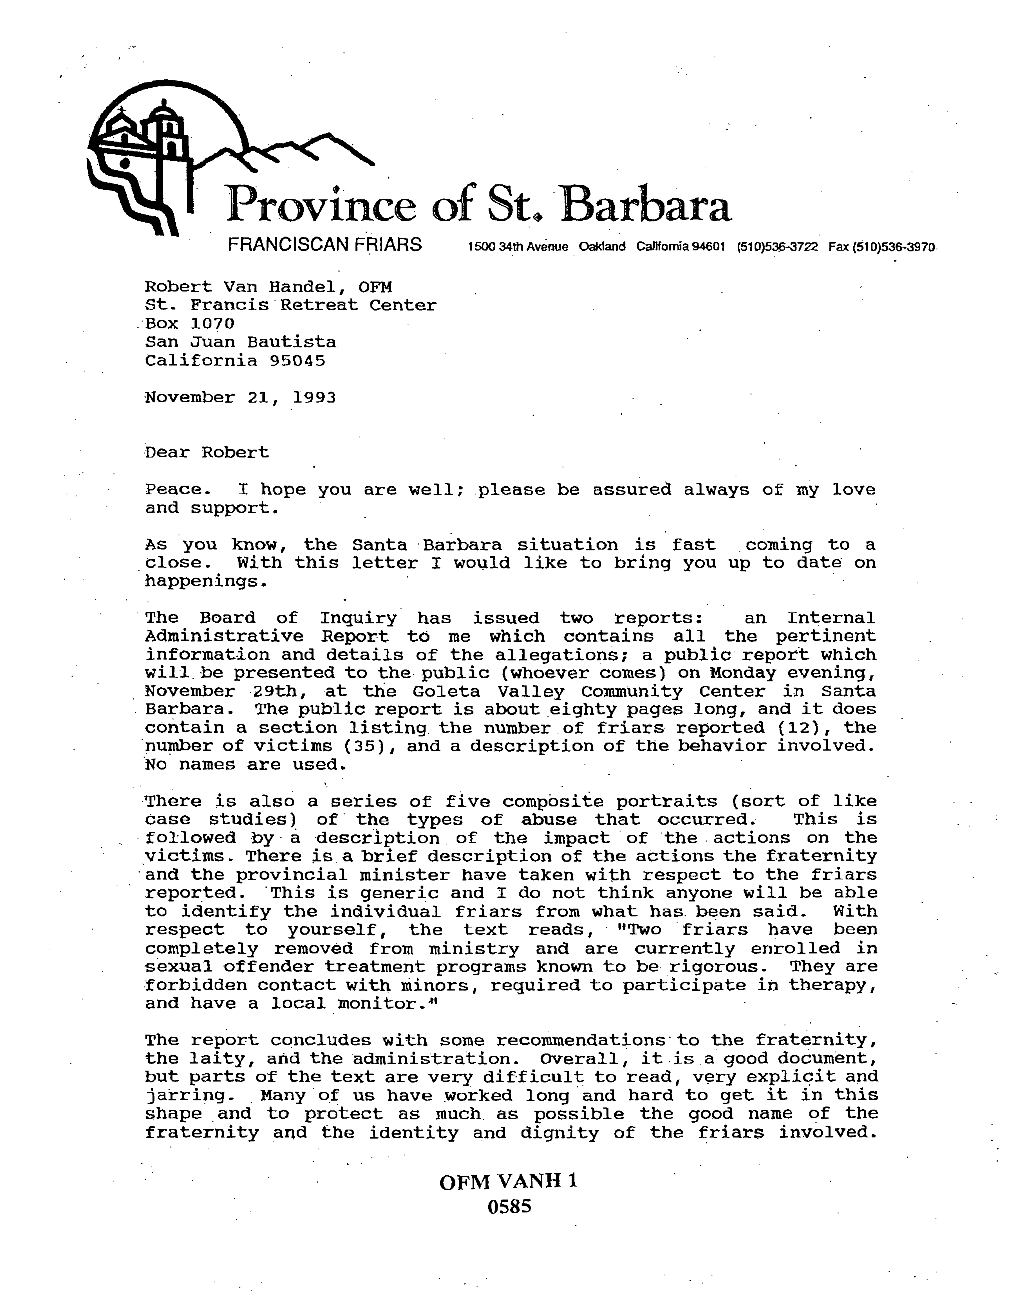 Province of St. Barbara FRANCISCAN FRIARS 150034Thav~Nue Oatdana California94601 (510)536-3722 Fax{510)536-3970